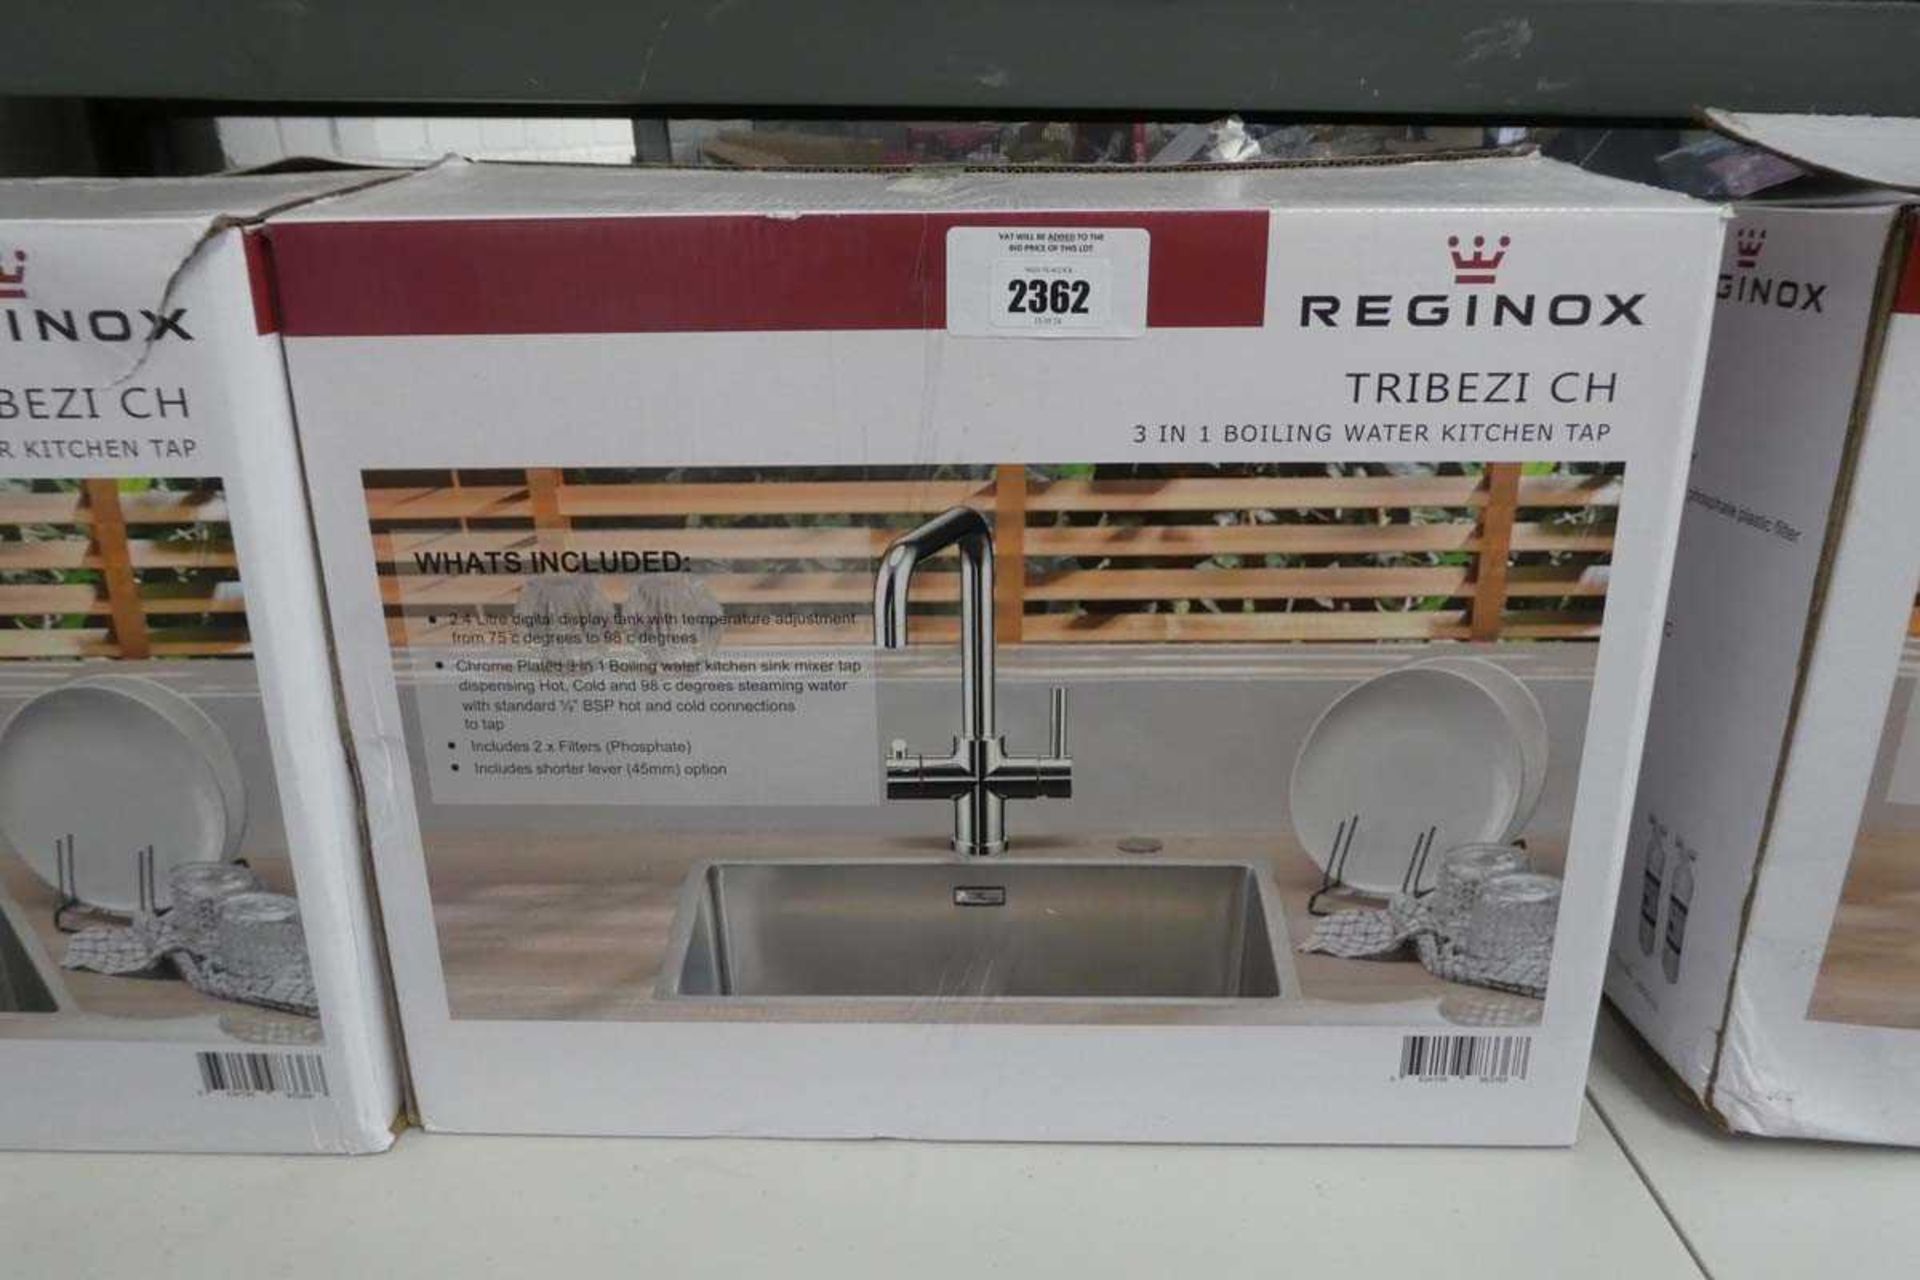 +VAT Boxed Reginox Tribezi ch 3 in 1 boiling water kitchen tap